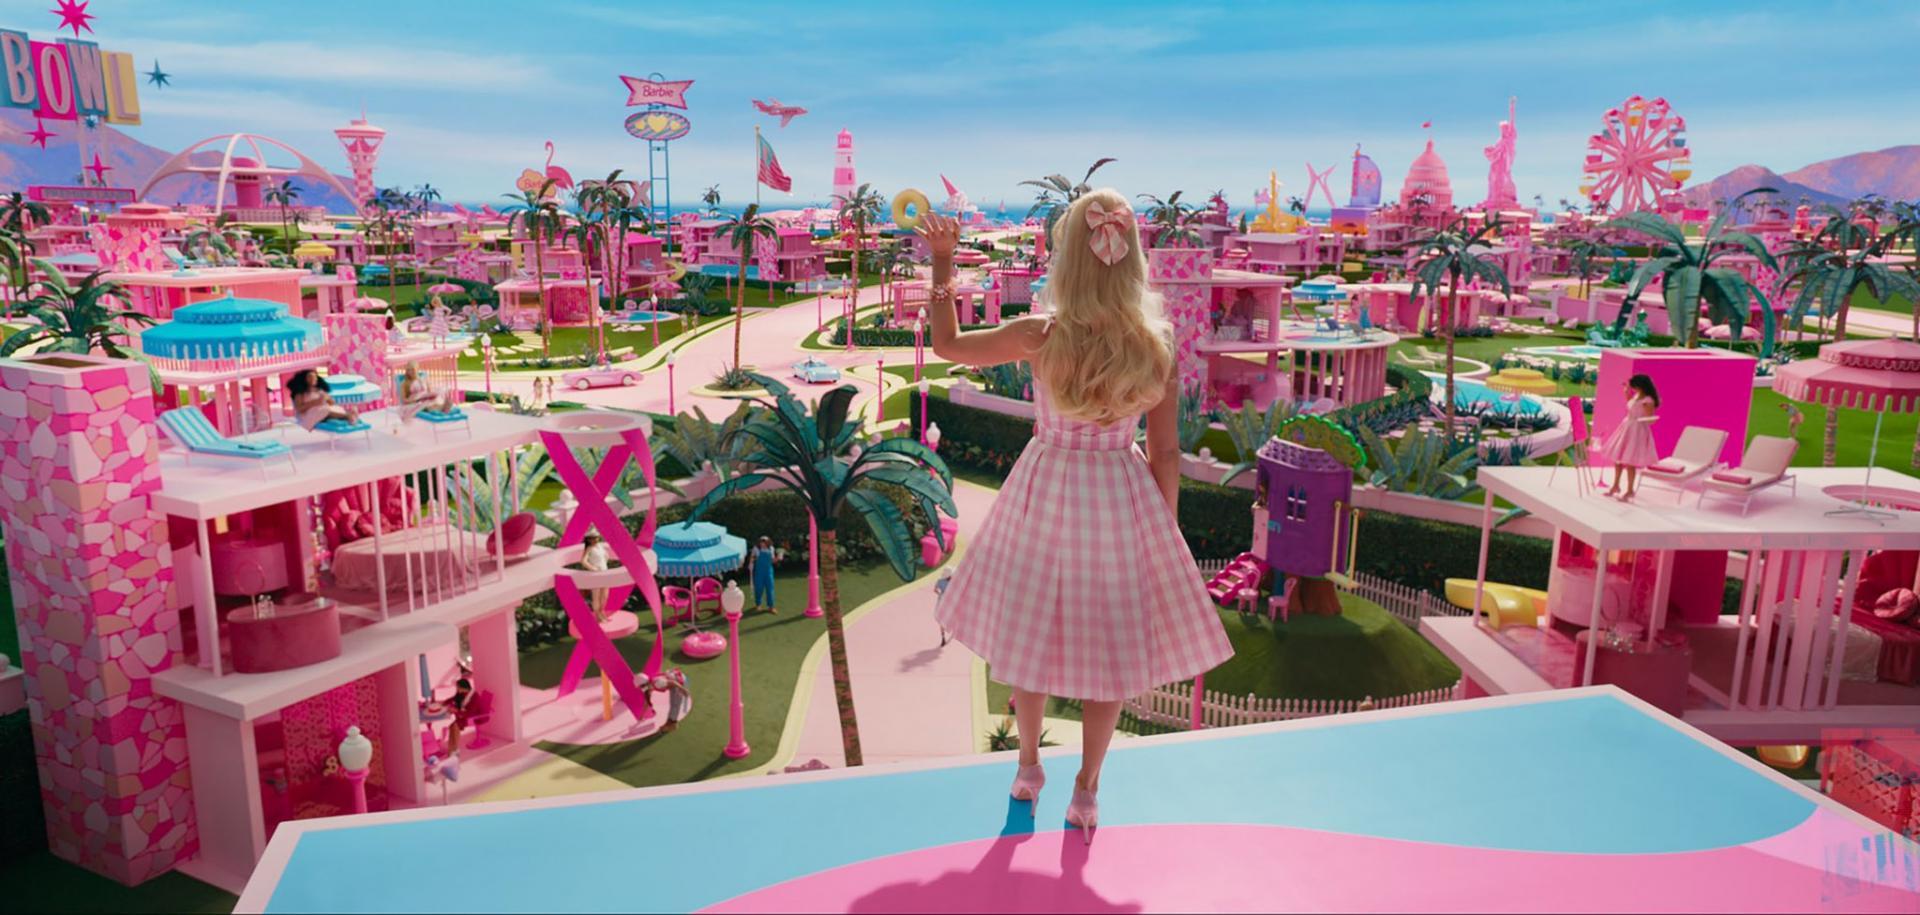 Cine de verano en Tijarafe: "Barbie"